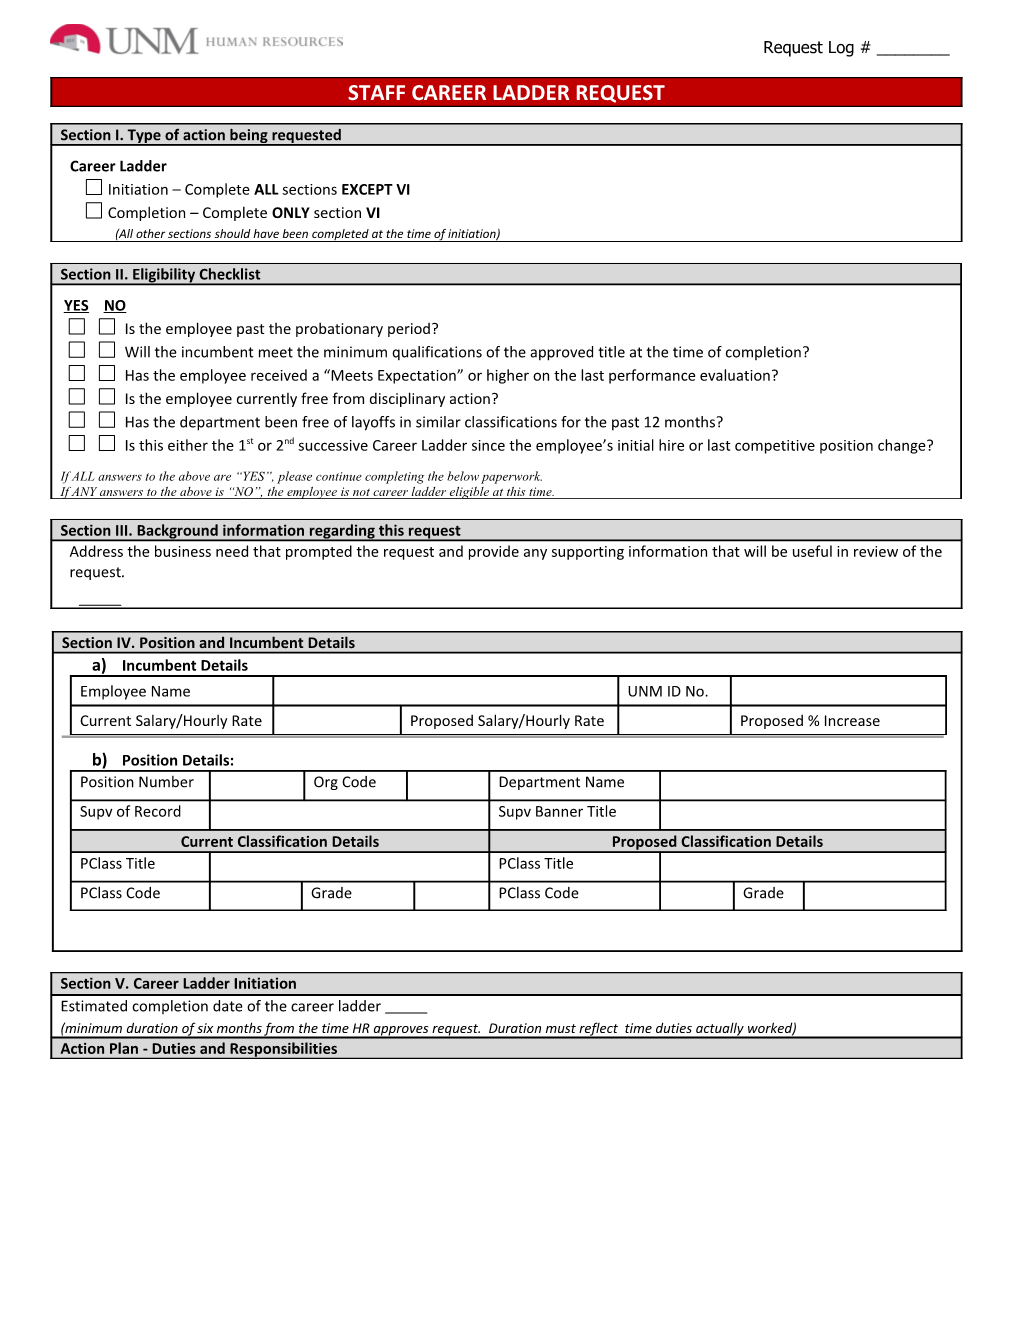 Staff Position Review Questionnaire